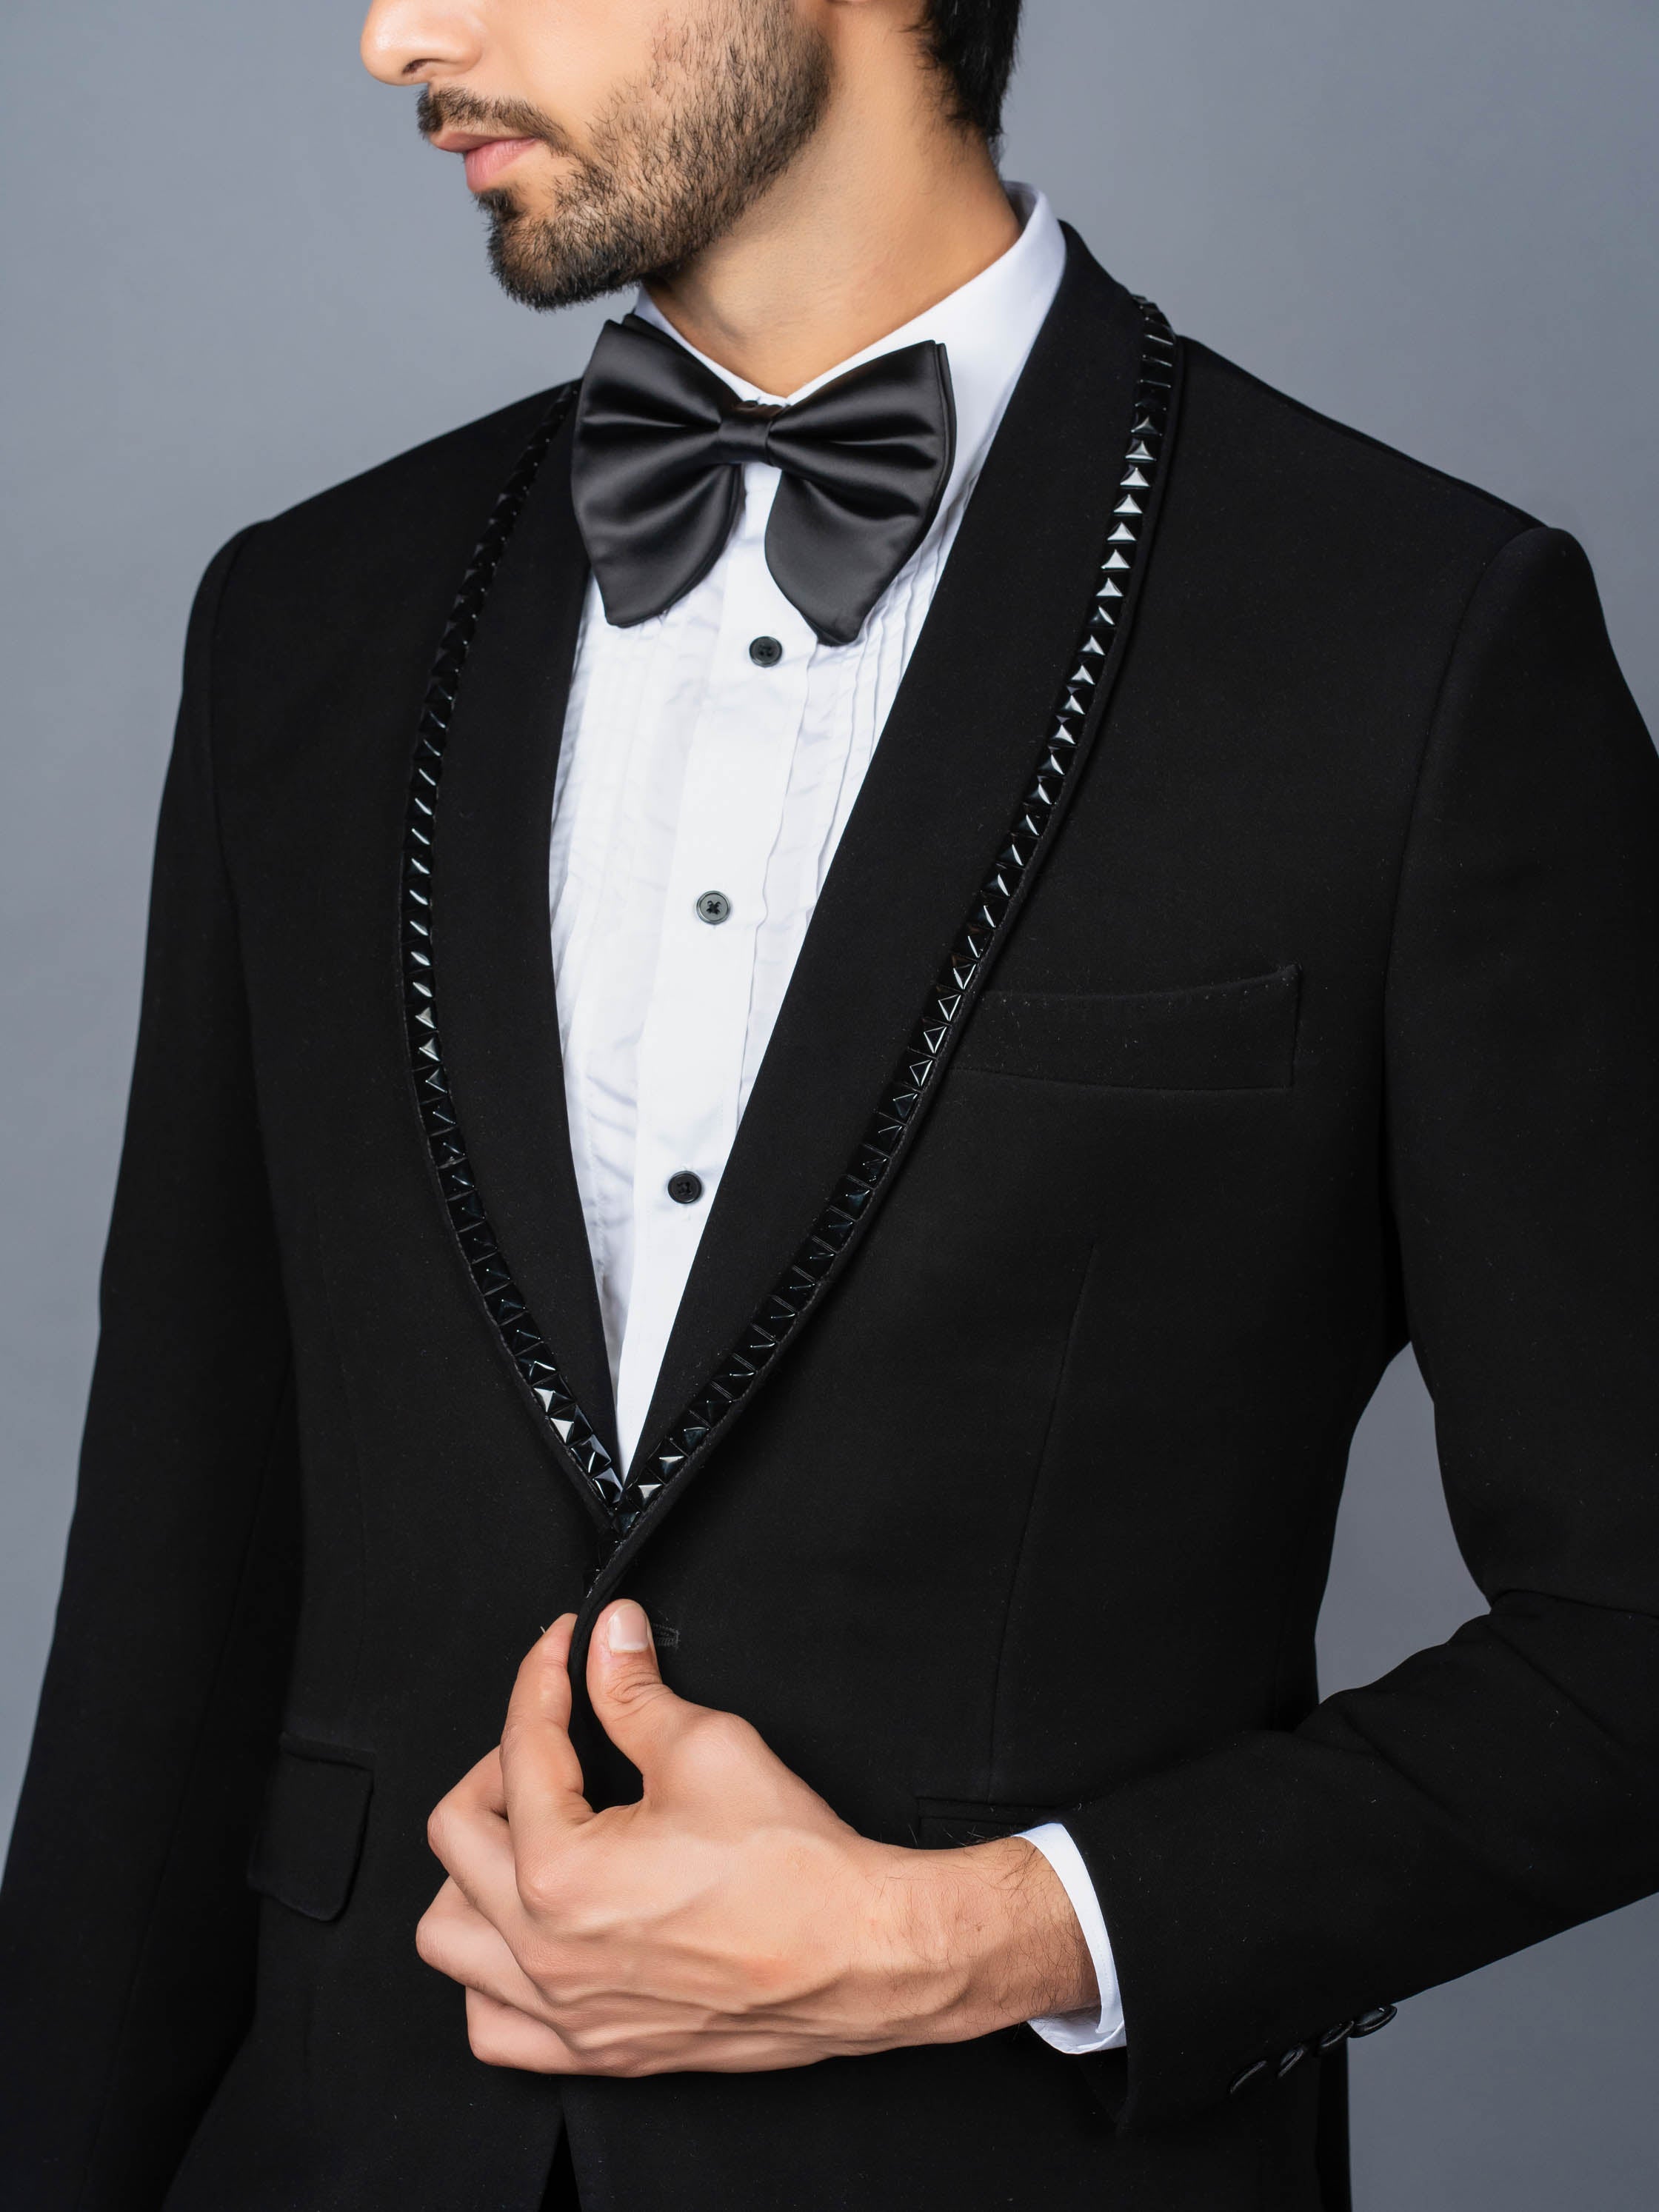 LUCCI Men's Black Classic Fit Formal Tuxedo Suit w/ Sateen Lapel & Trim NEW  | eBay